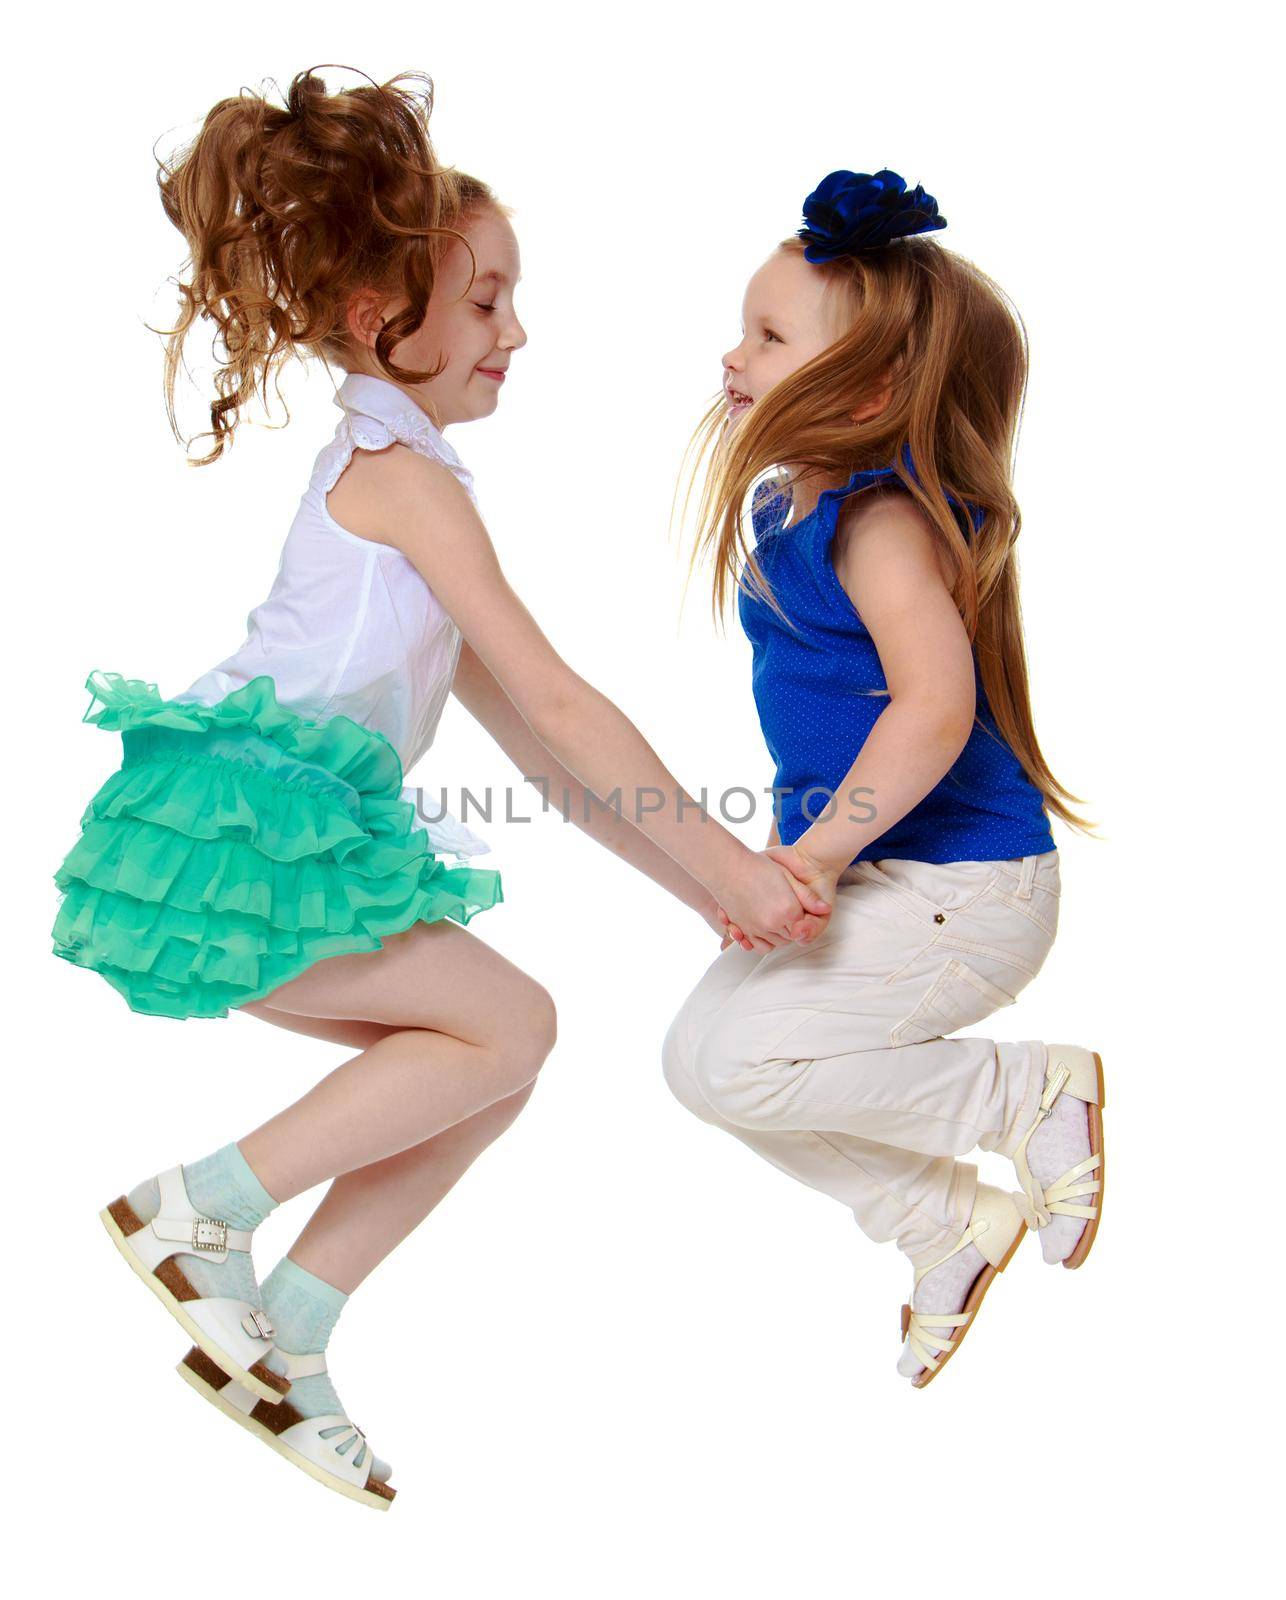 two girls jumping by kolesnikov_studio